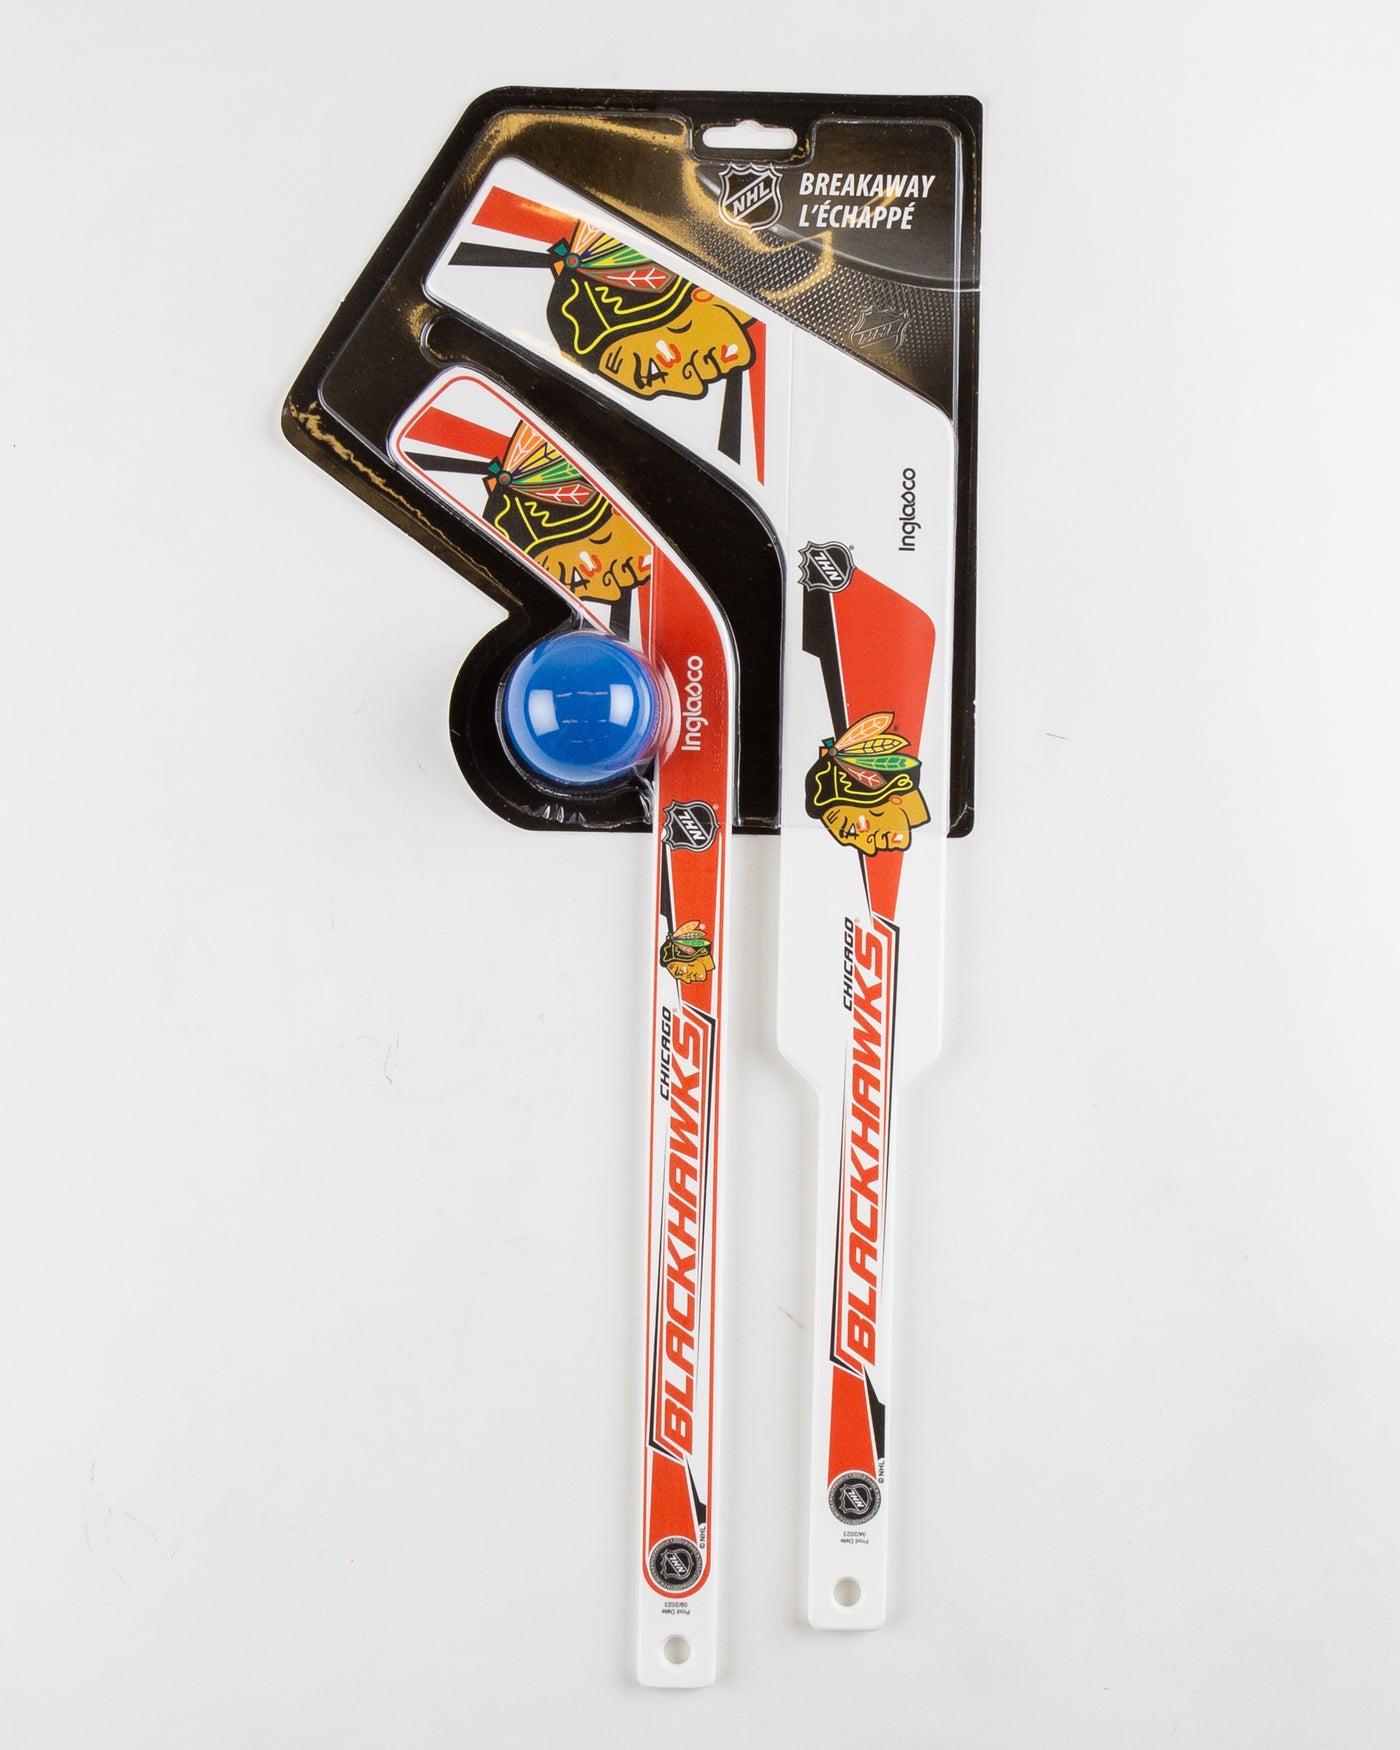 Chicago Blackhawks toy goalie stick - packaged